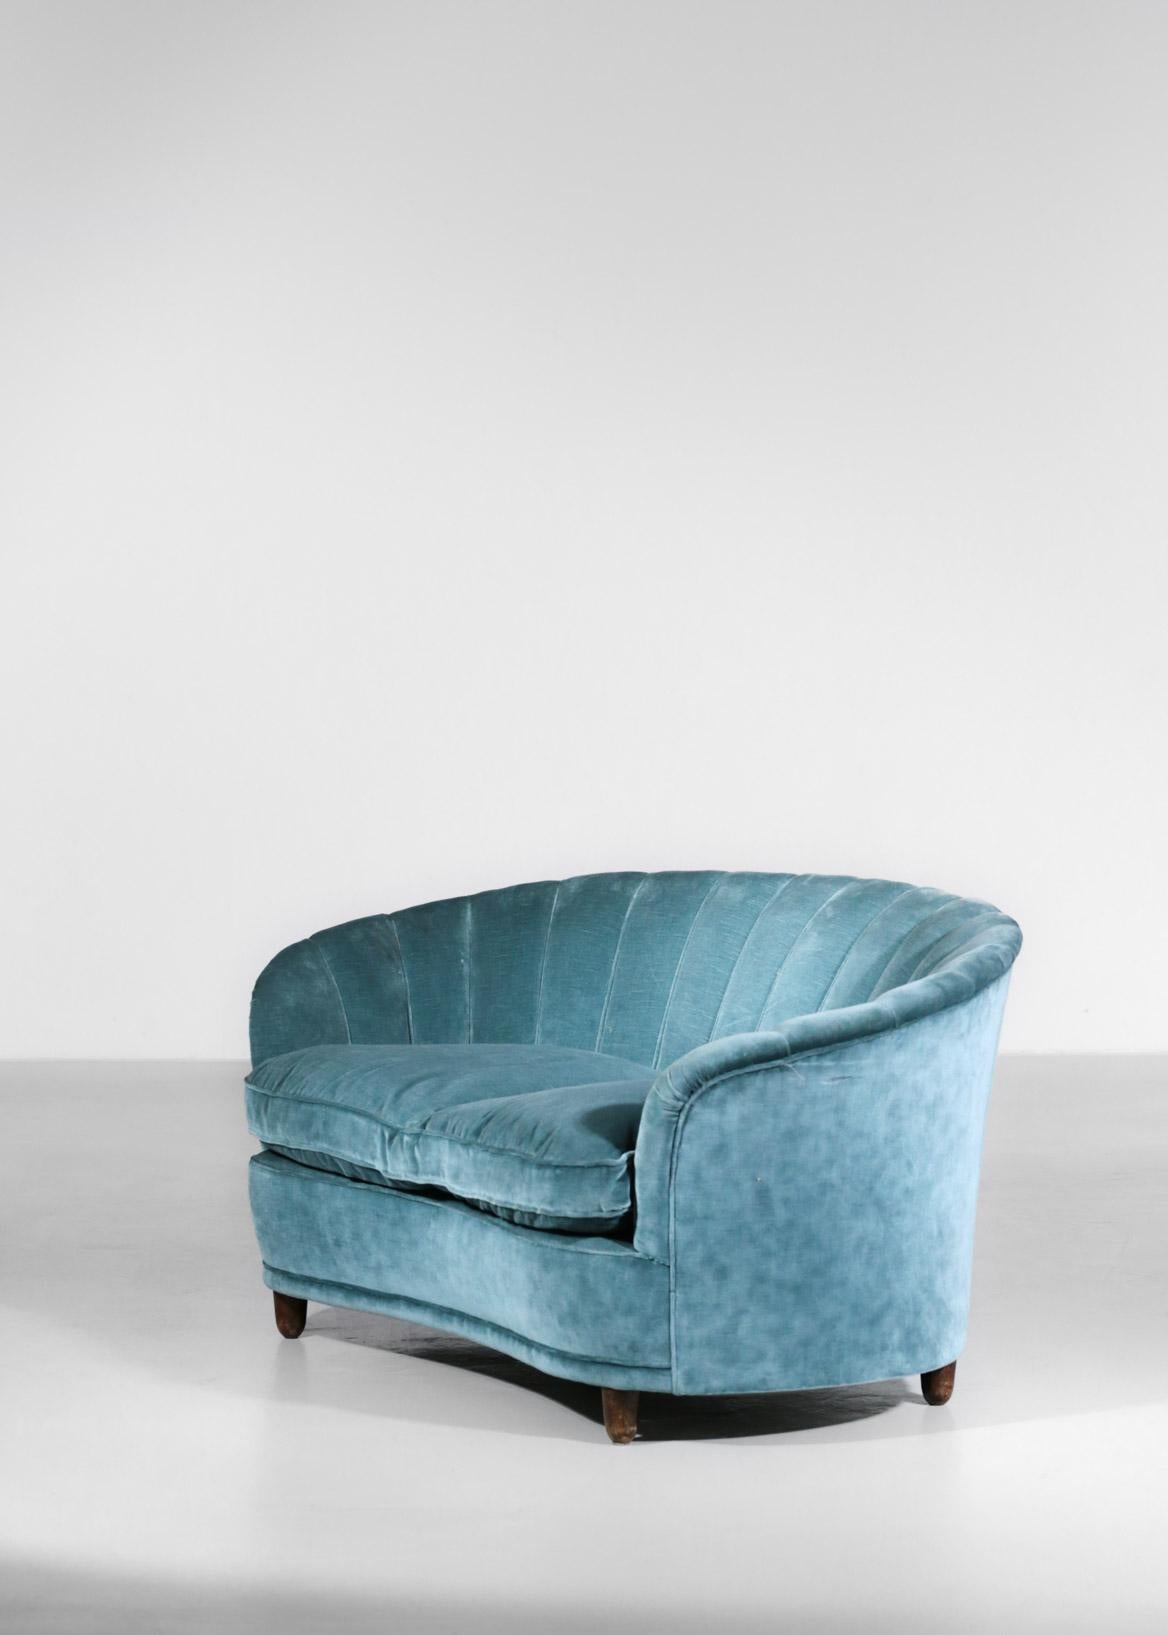 Mid-20th Century Italian Sofa by Gio Ponti Design 1960s Velvet Vintage Designer 2 Seat